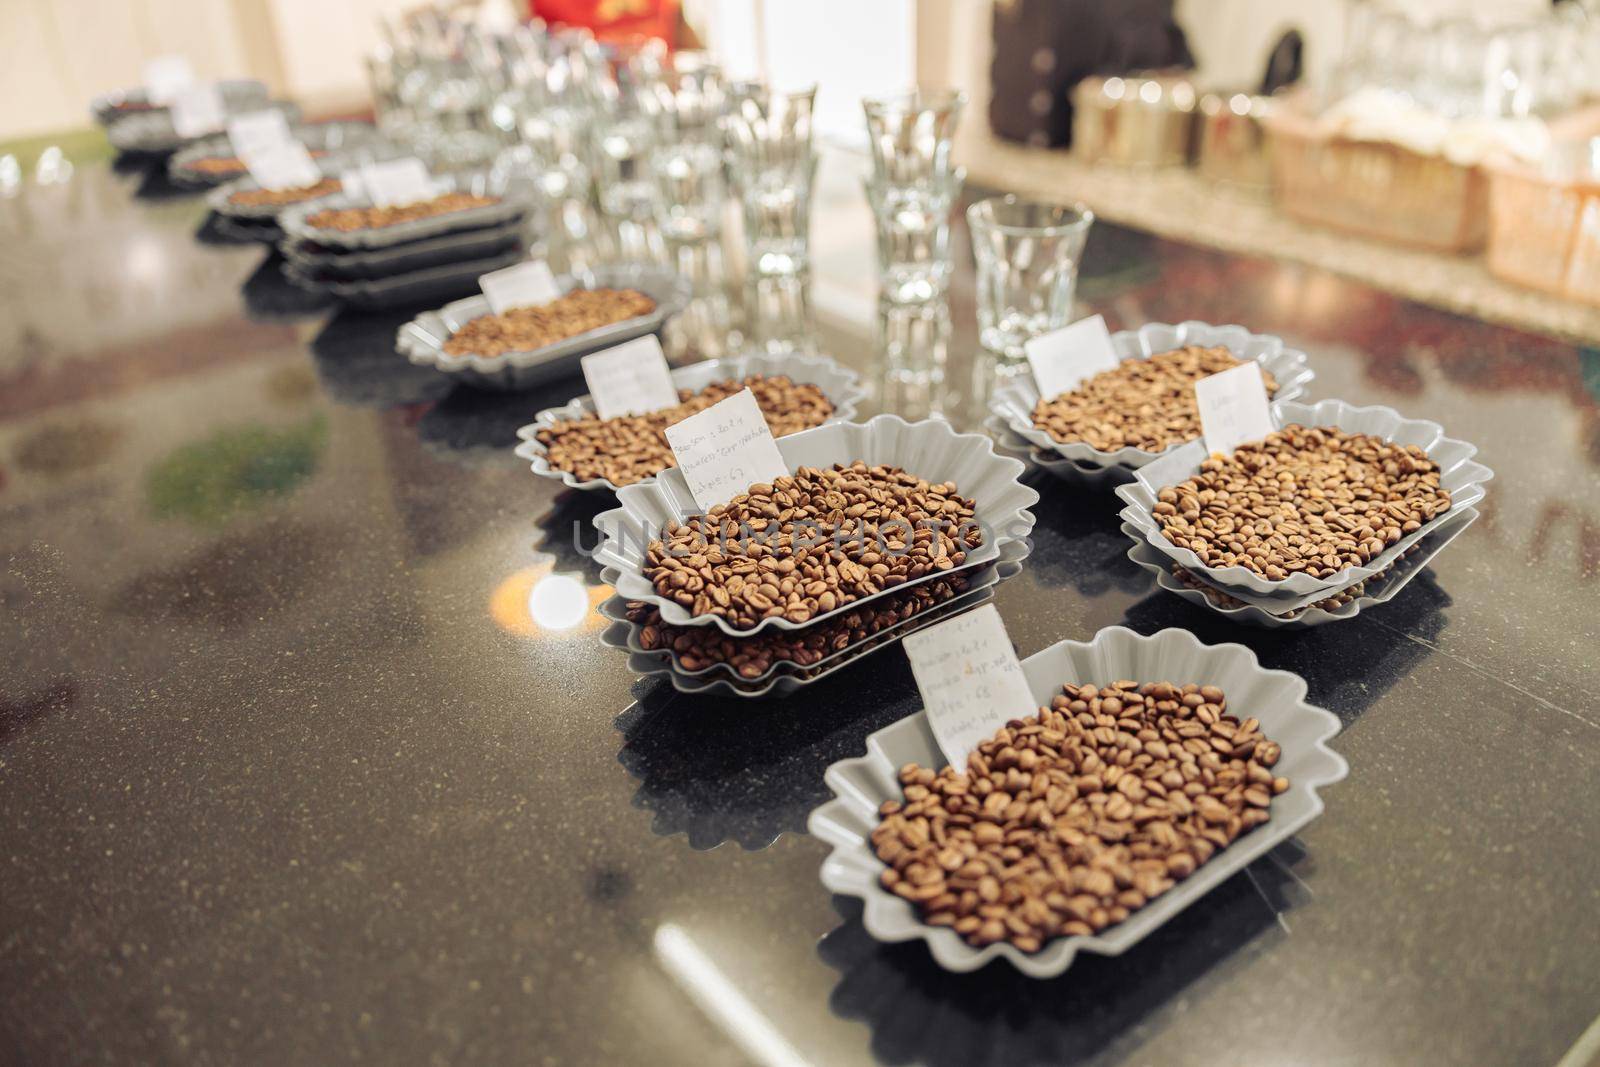 Different varieties of coffee beans for tasting by Yaroslav_astakhov